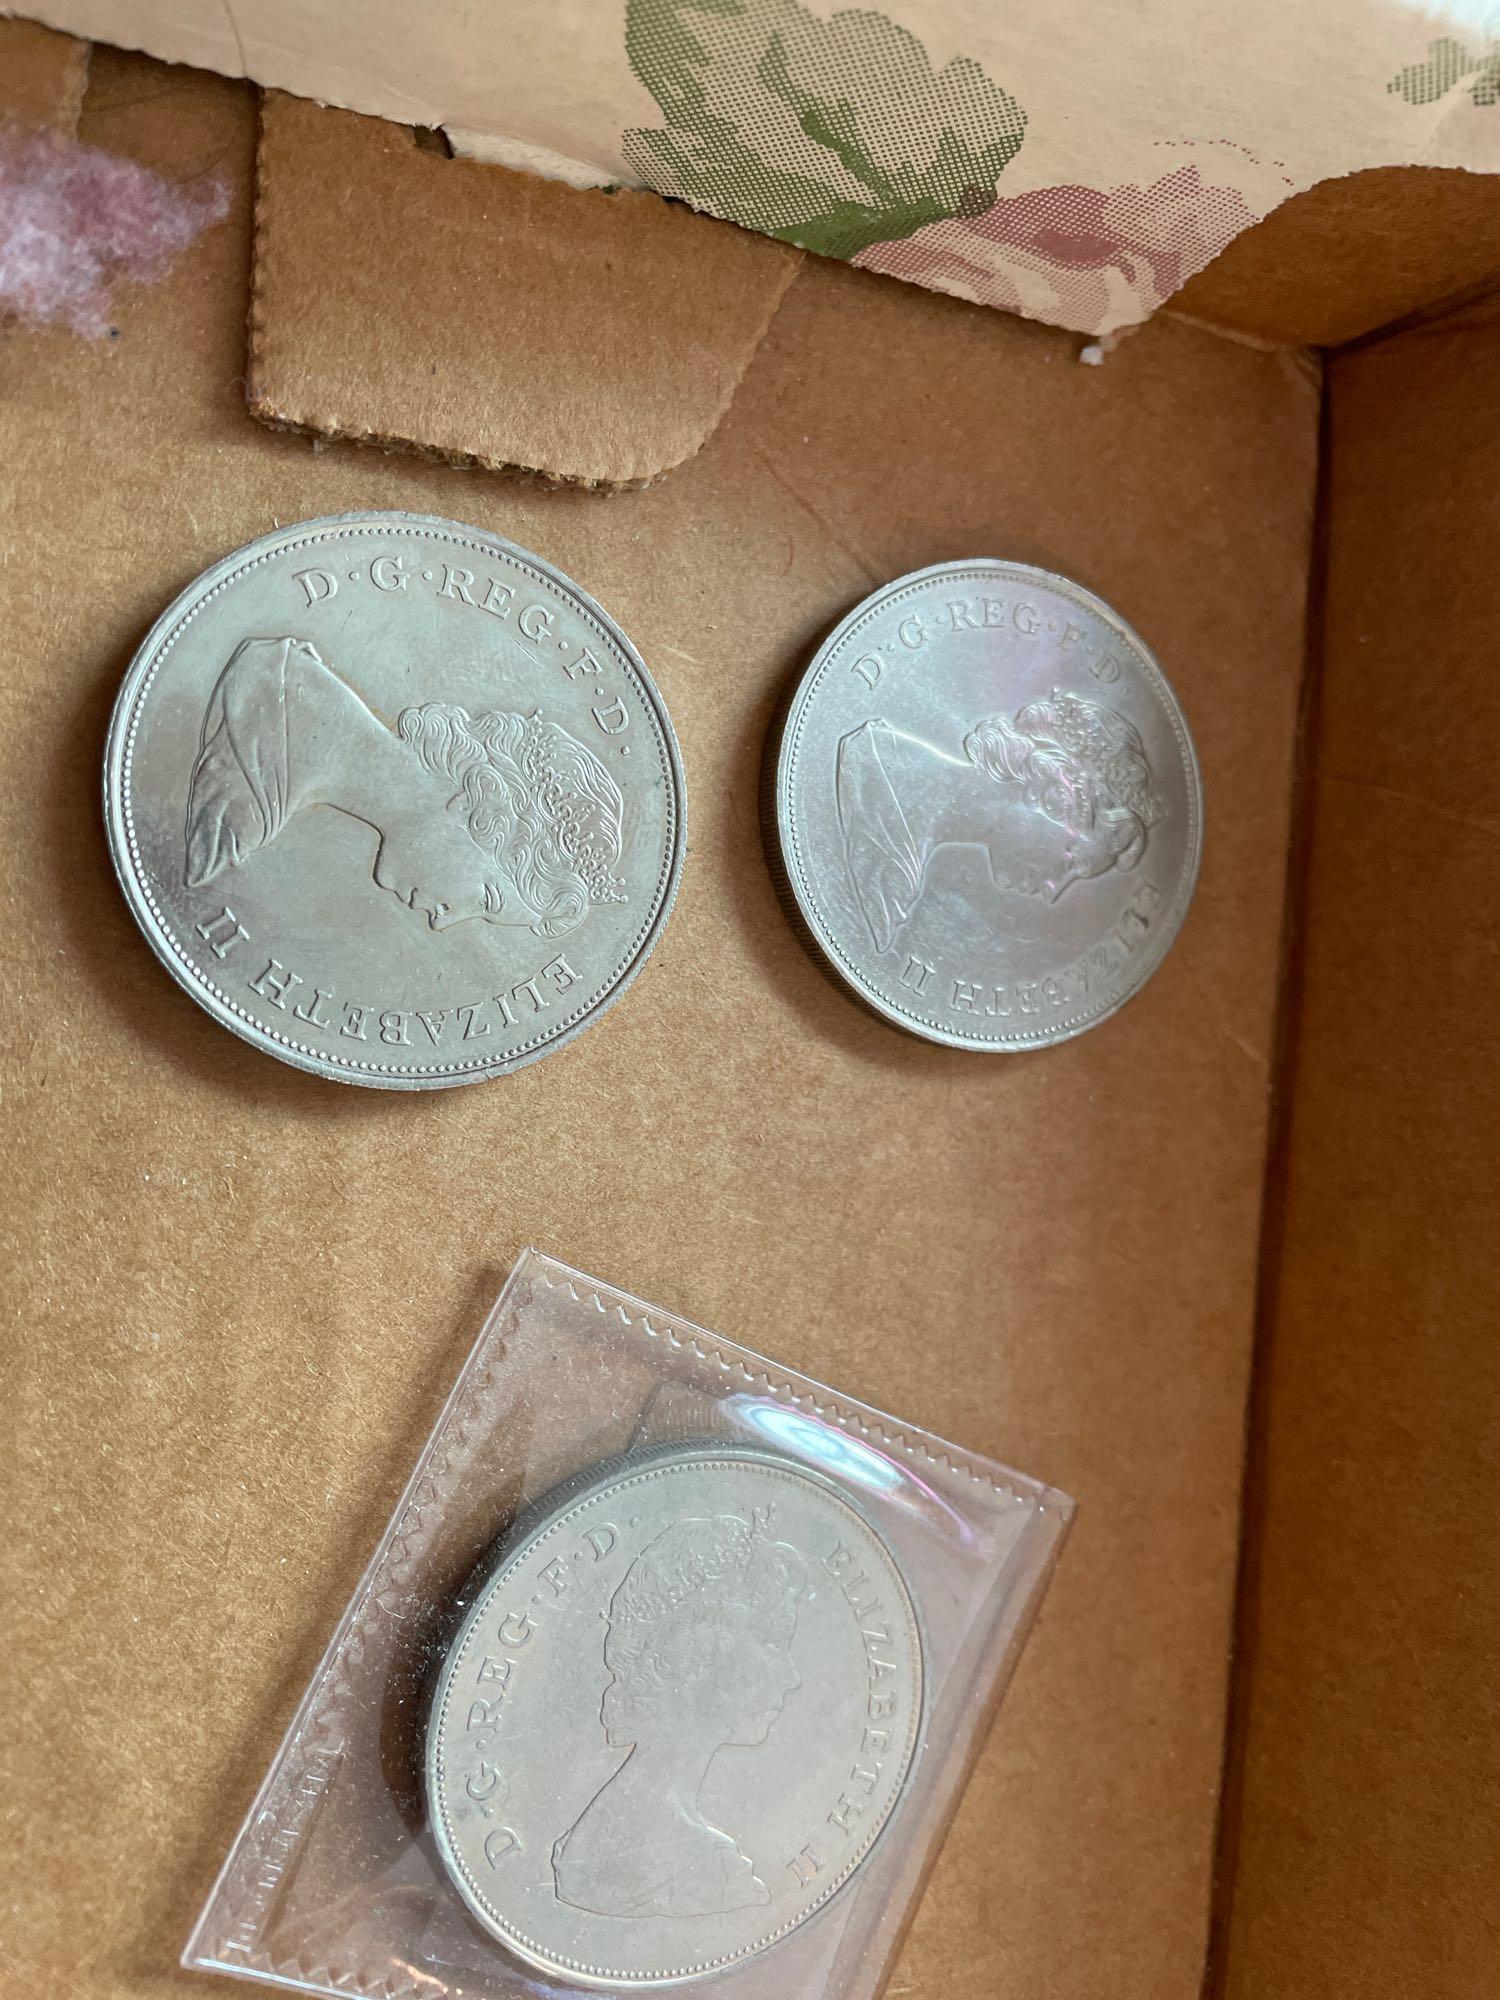 $1 Dollar Coins - Half Dollars - English Coins